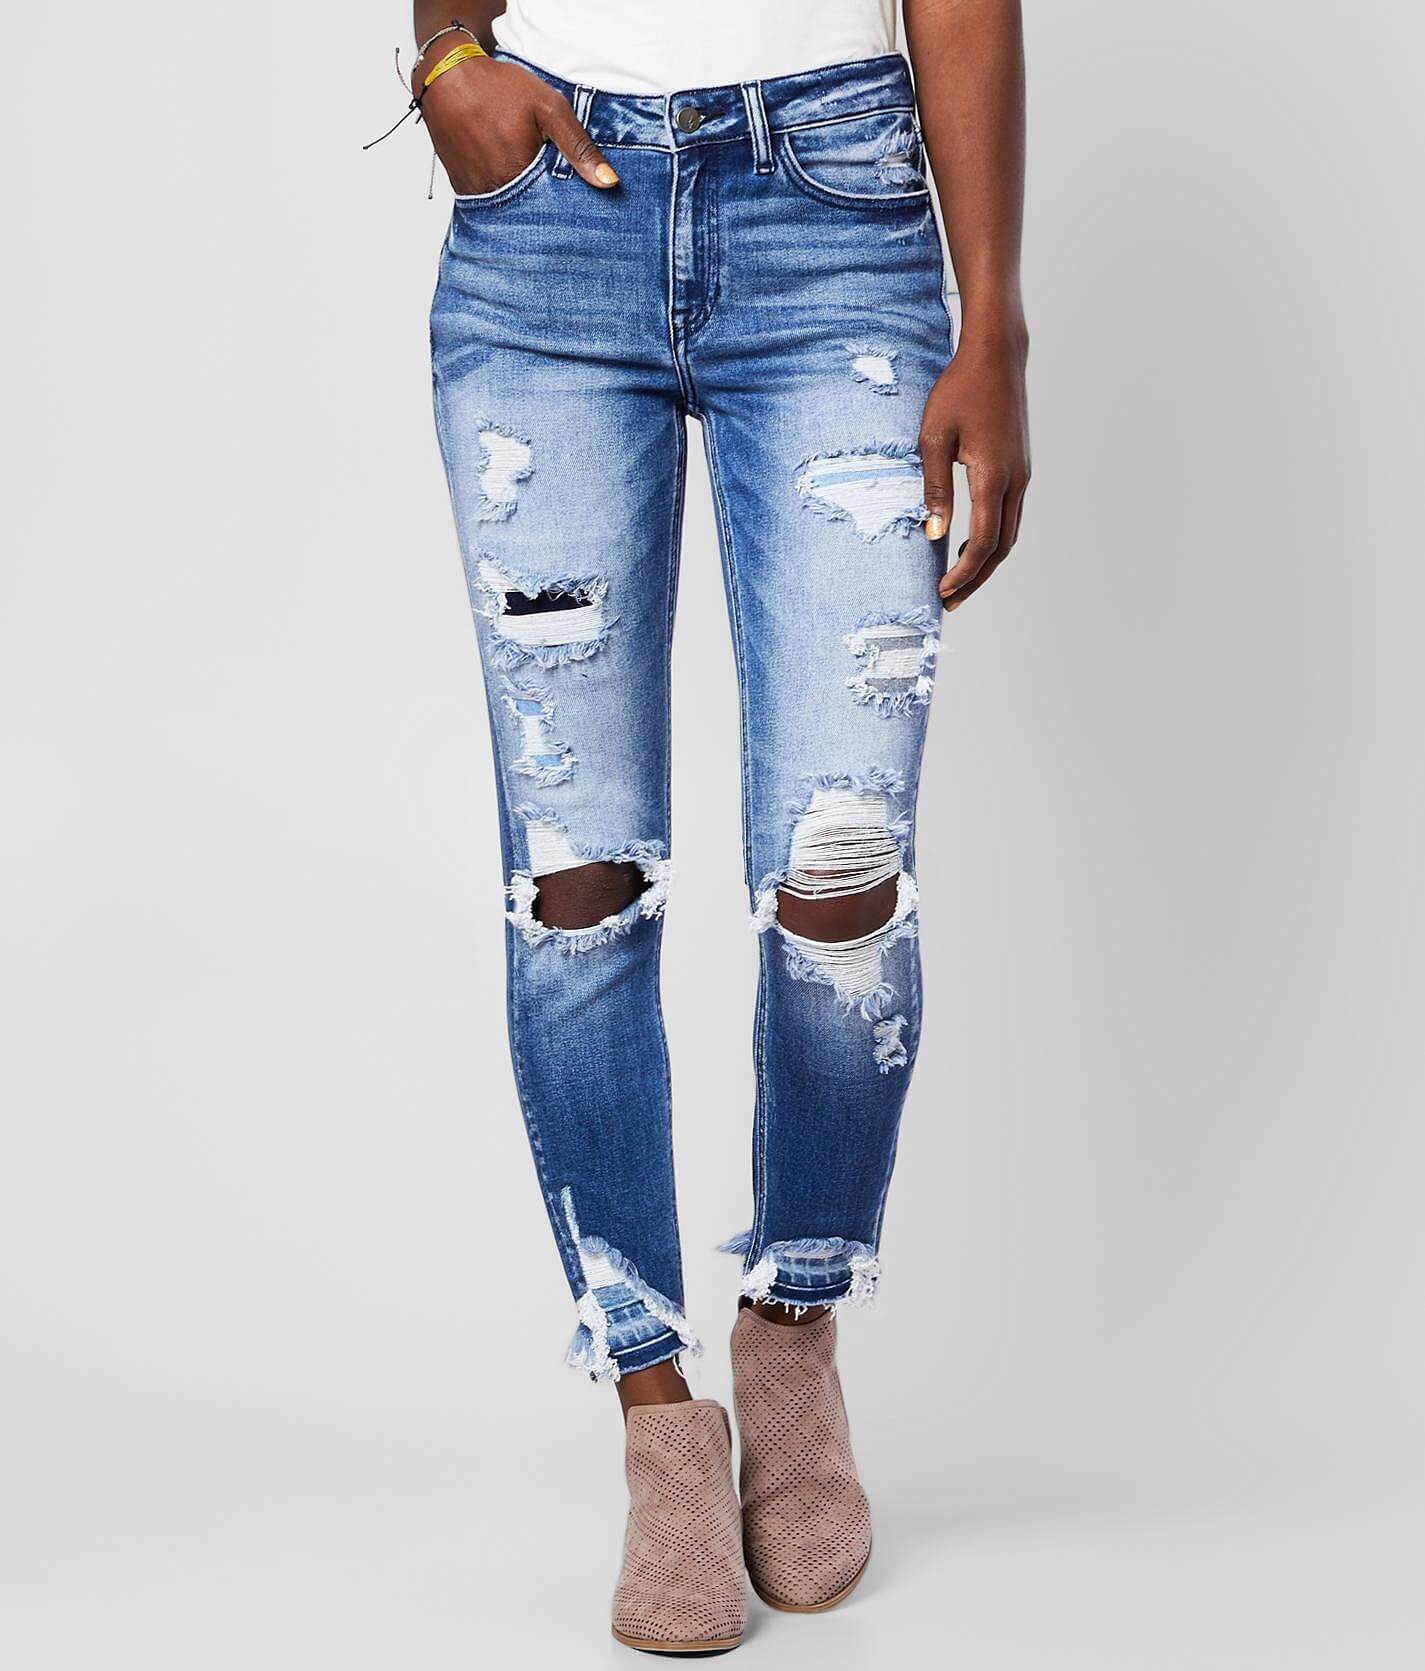 kancan jeans